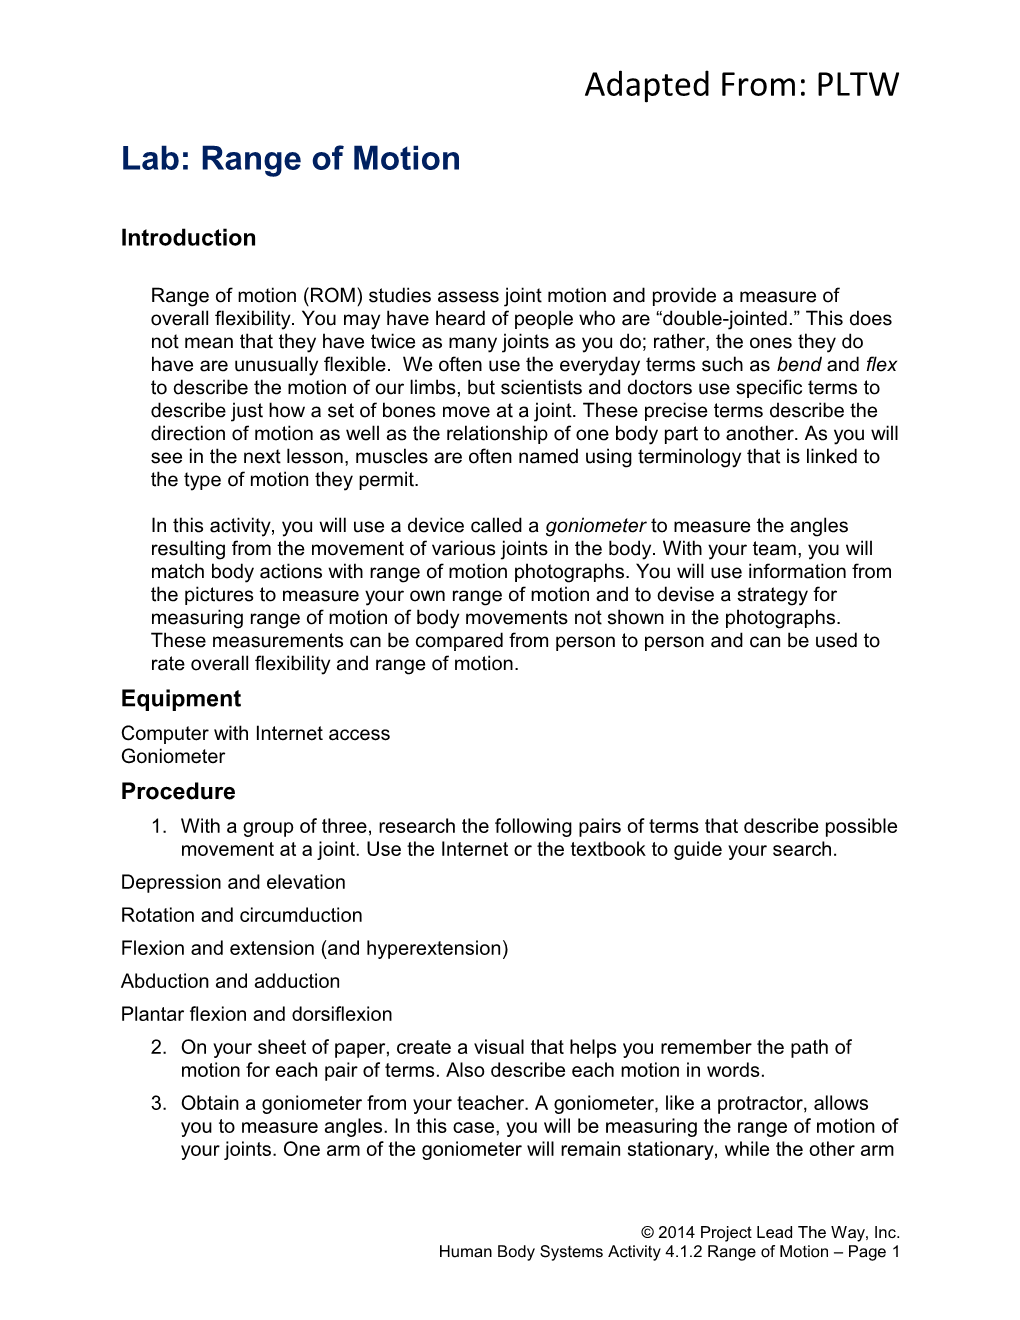 Lab: Range of Motion